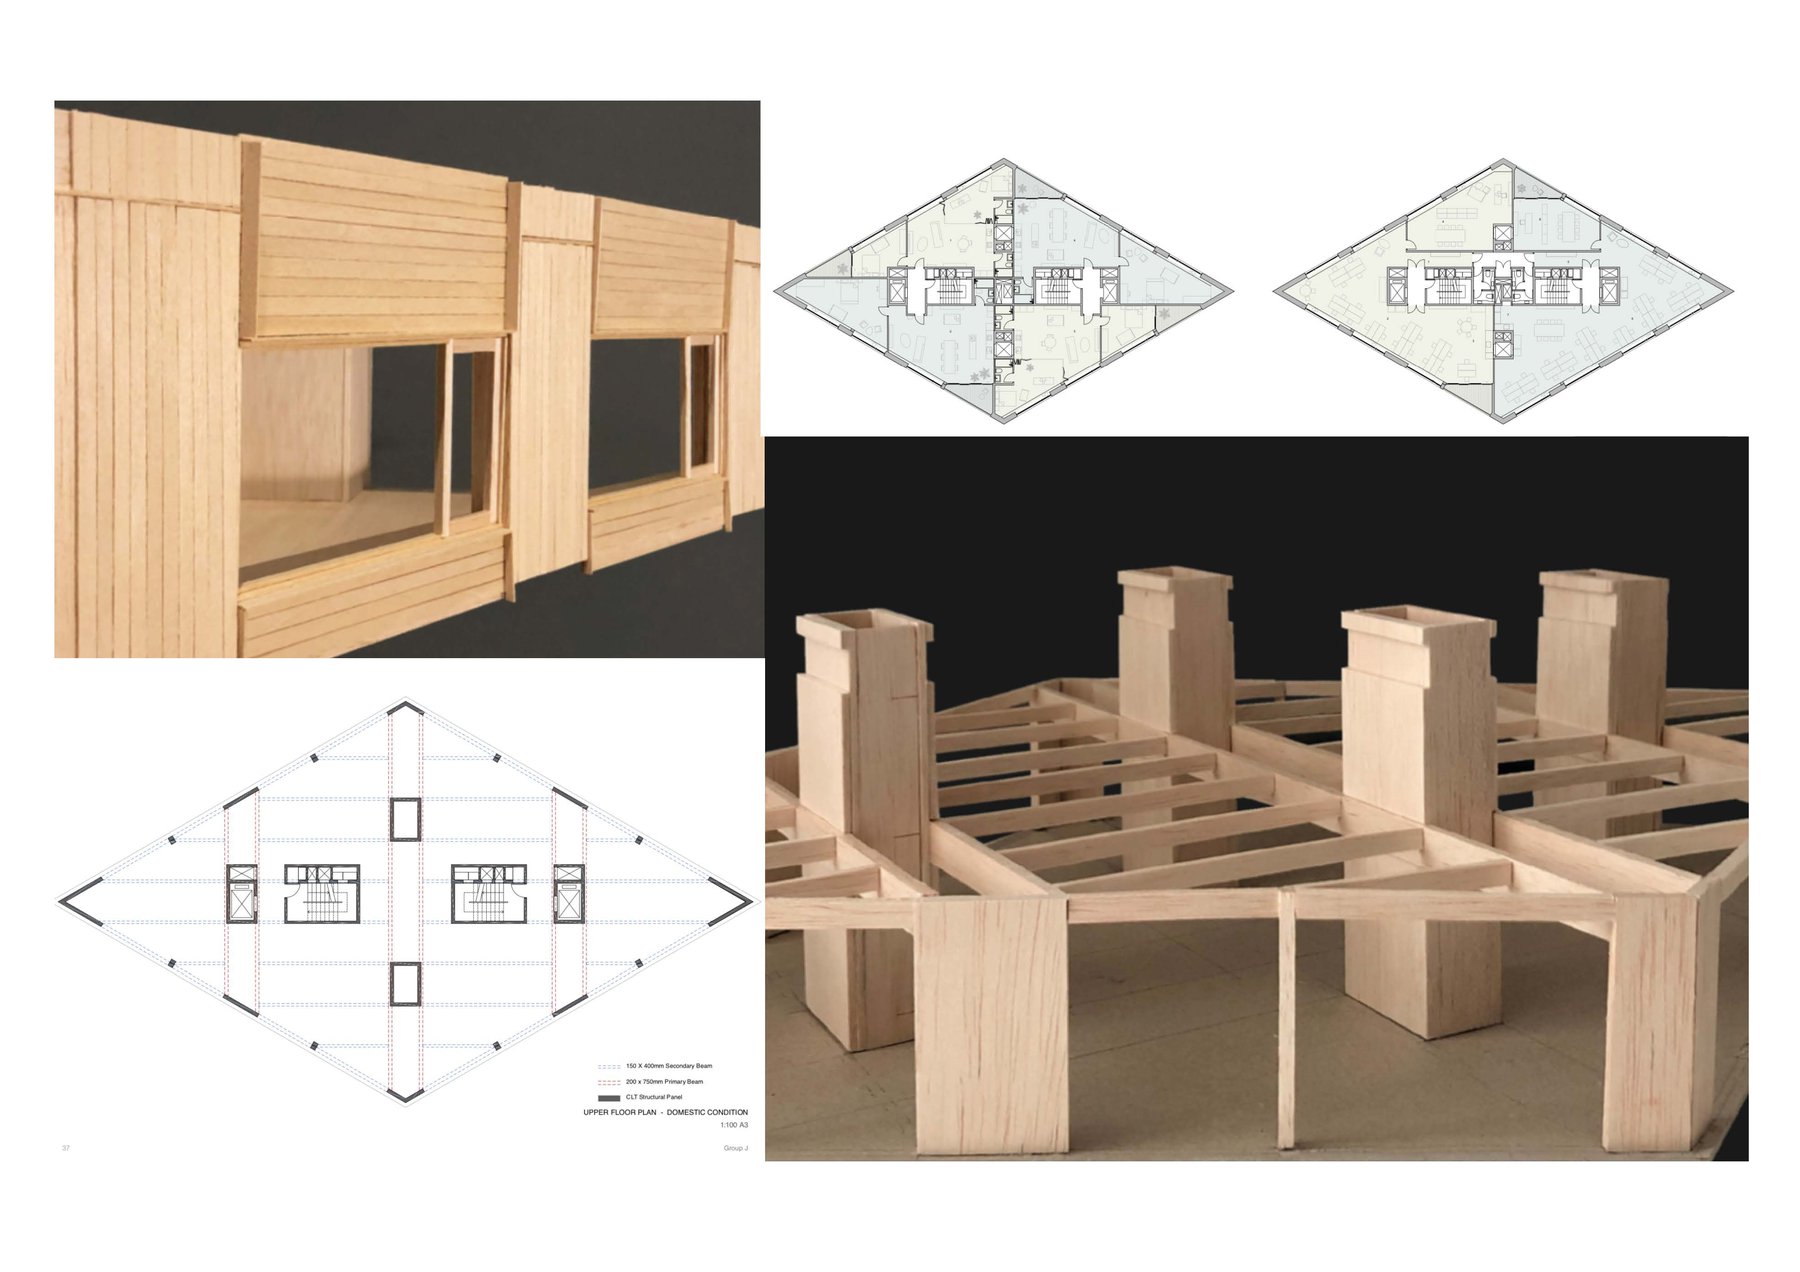 3d model of a building built in wood.jpg